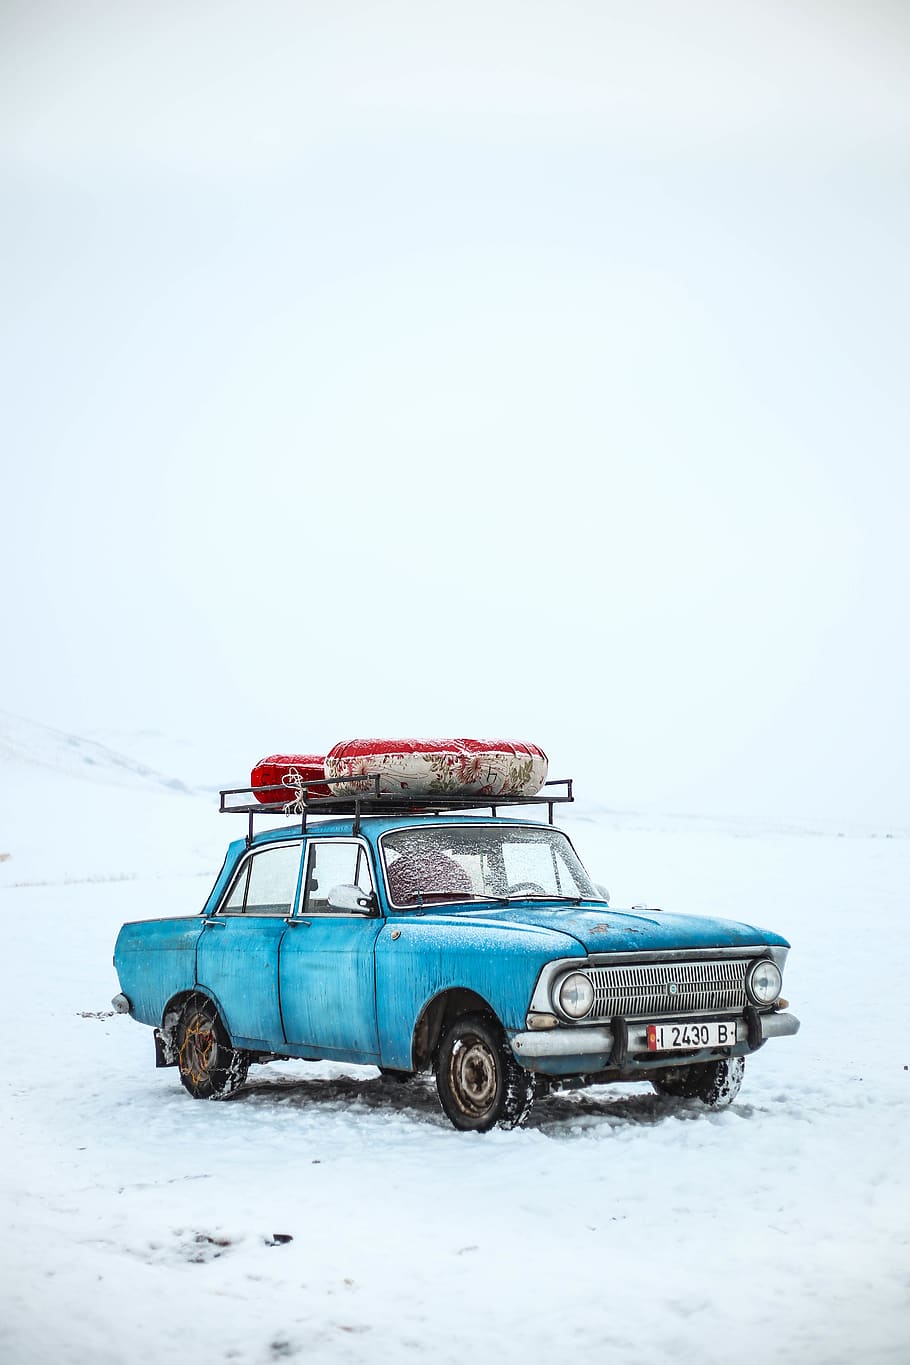 Blue Box-type Sedan, auto, automobile, car, cold, daylight, frost